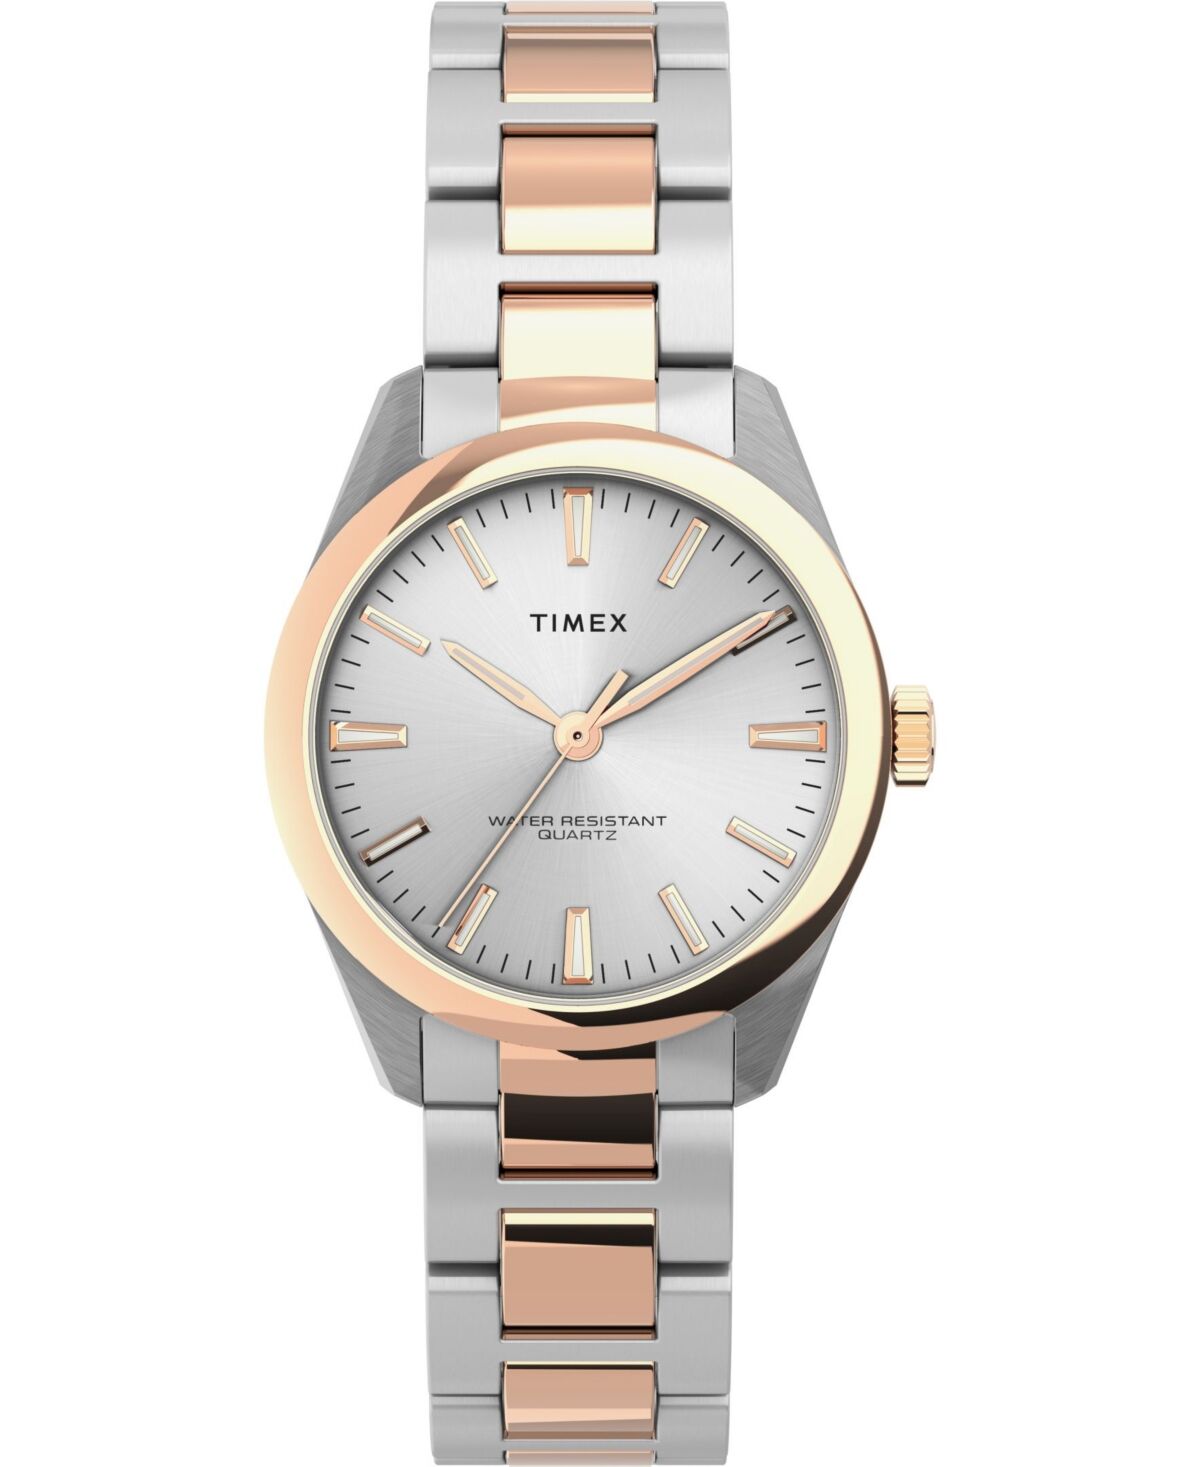 Timex Women's City Two-Tone Stainless Steel Bracelet Watch 32mm - Two-Tone